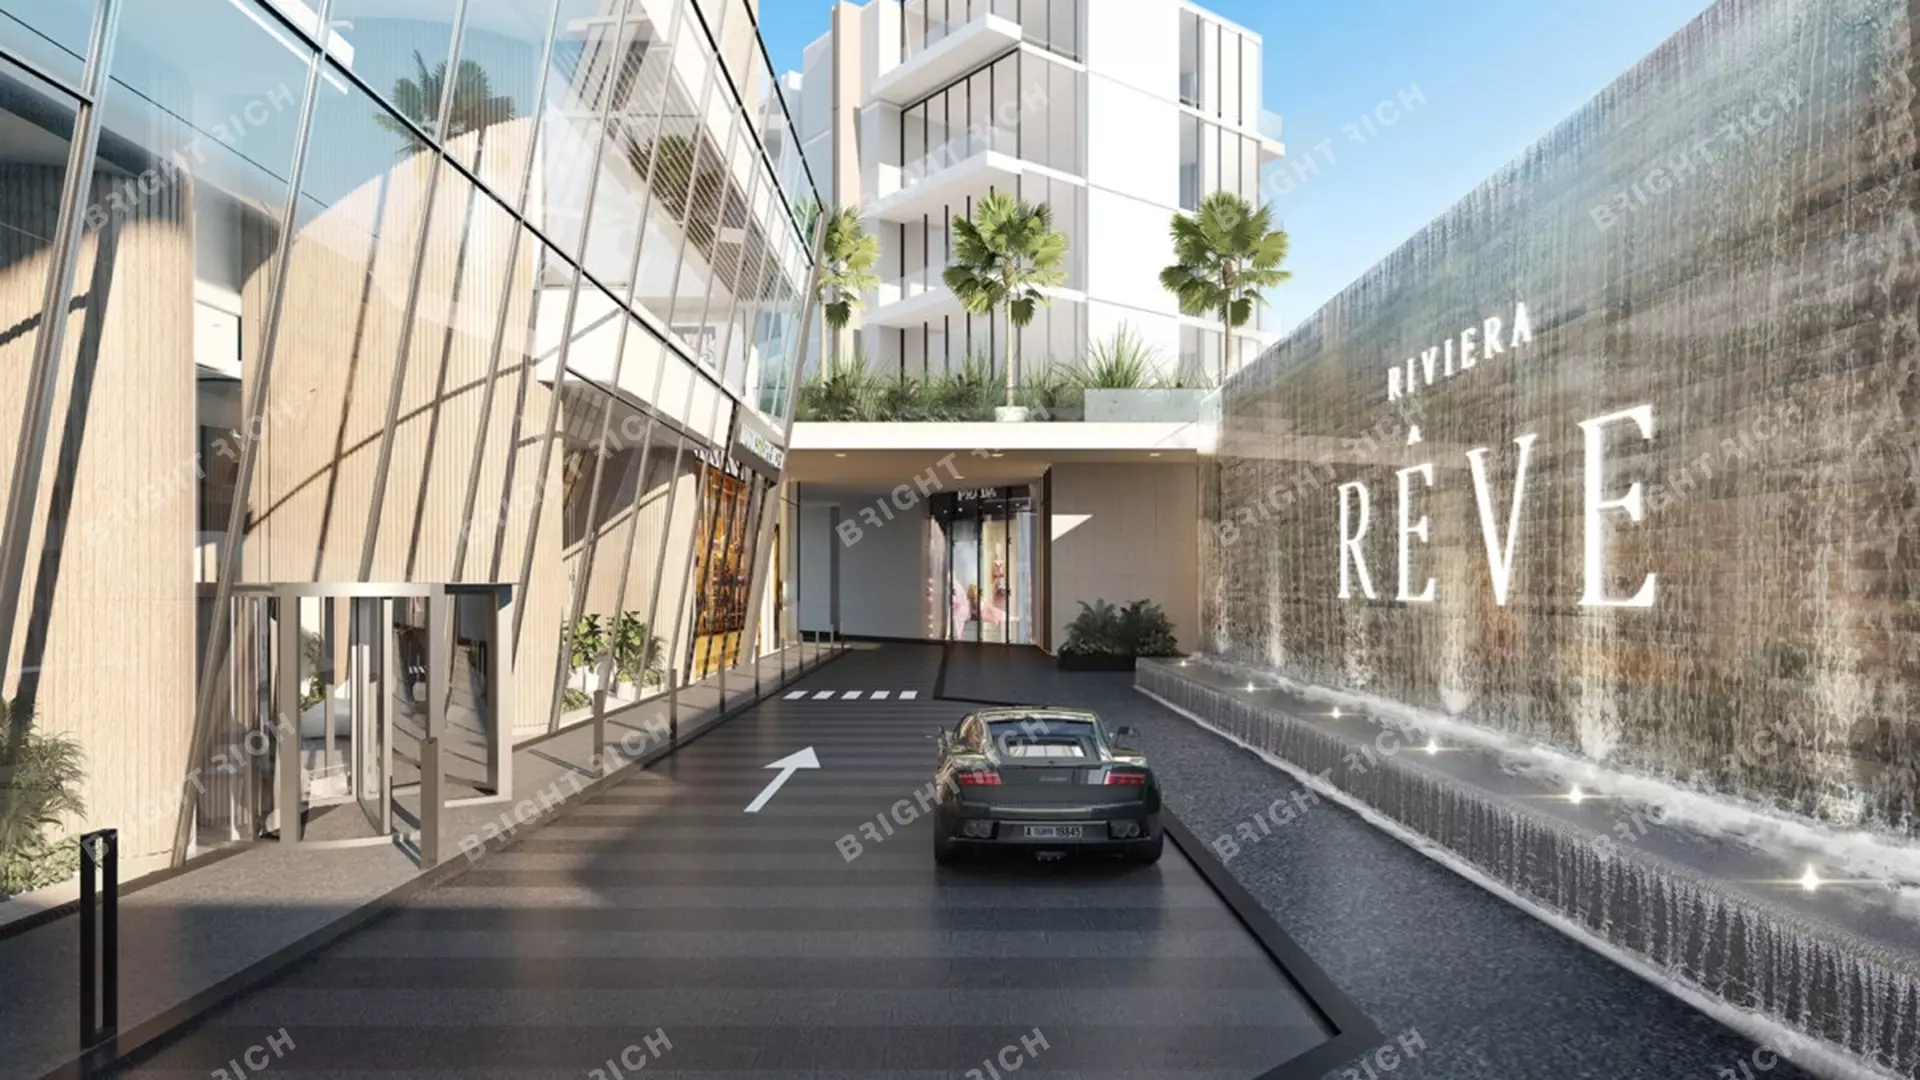 Riviera Reve, апарт-комплекс в Дубае - 4